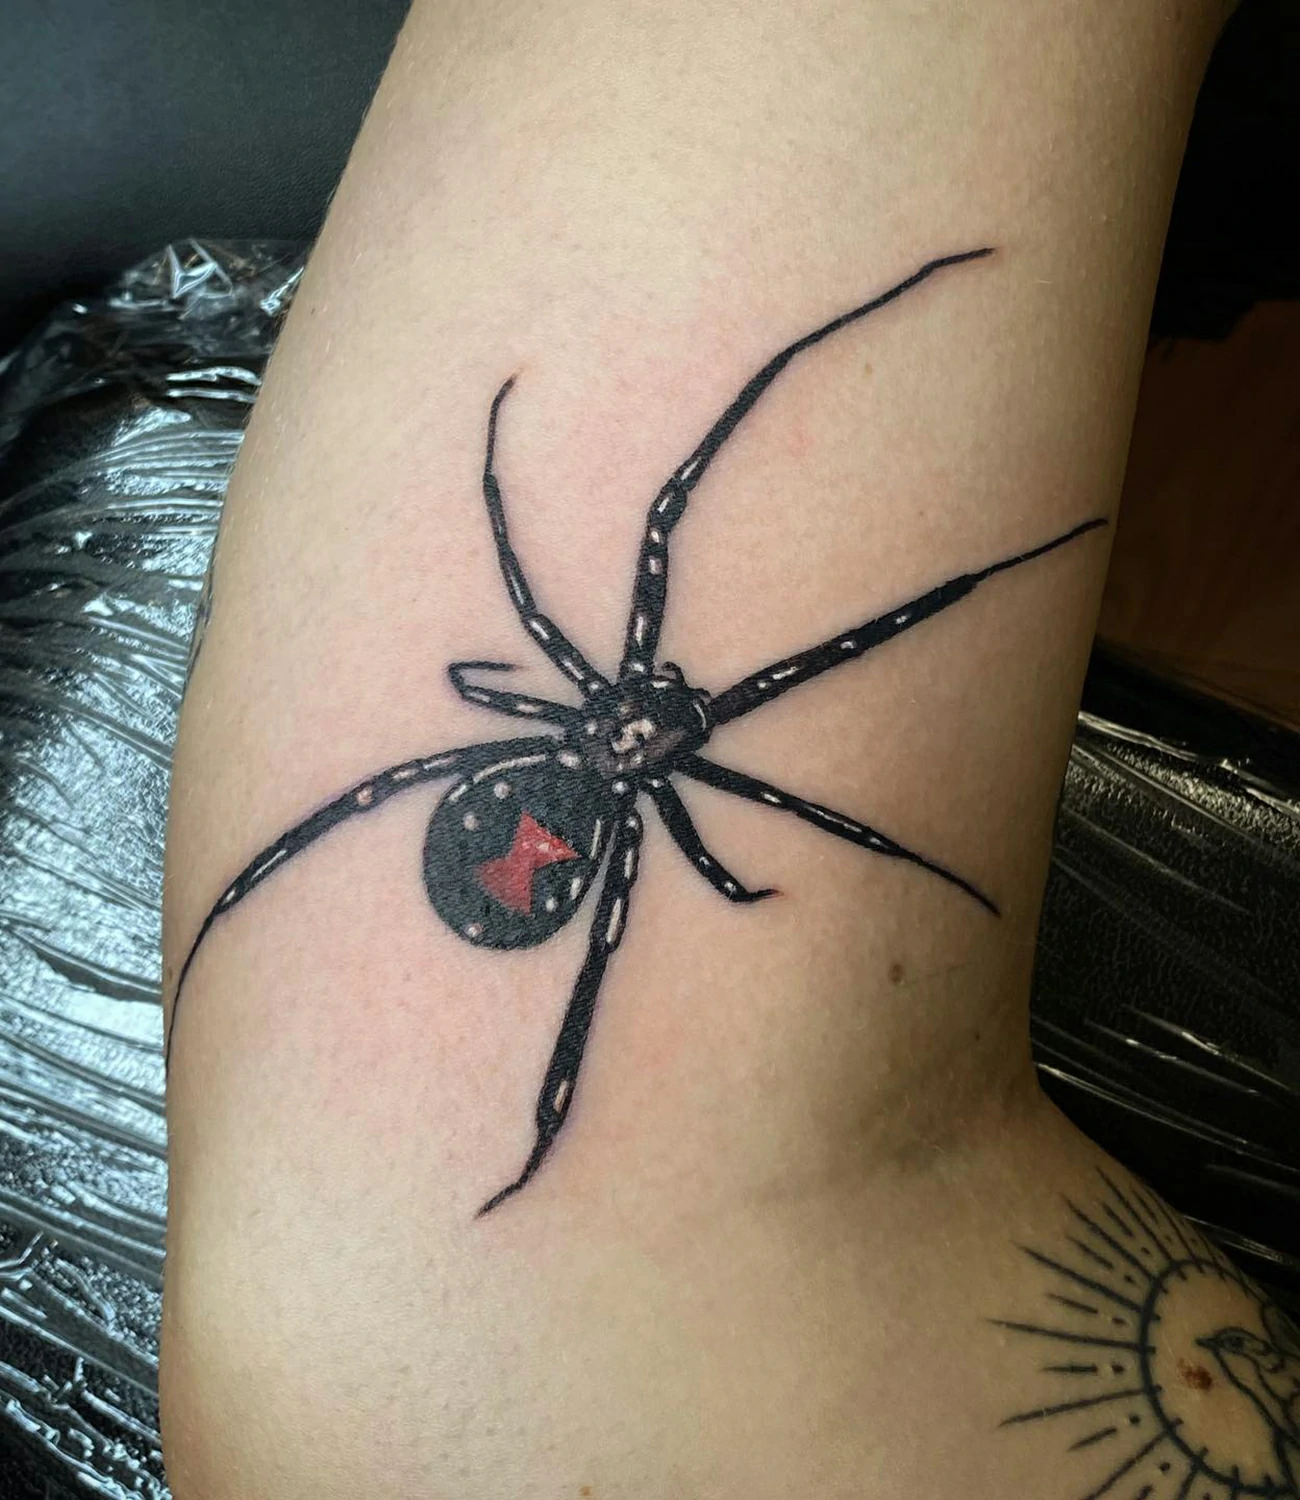 Black widow spider tattoo